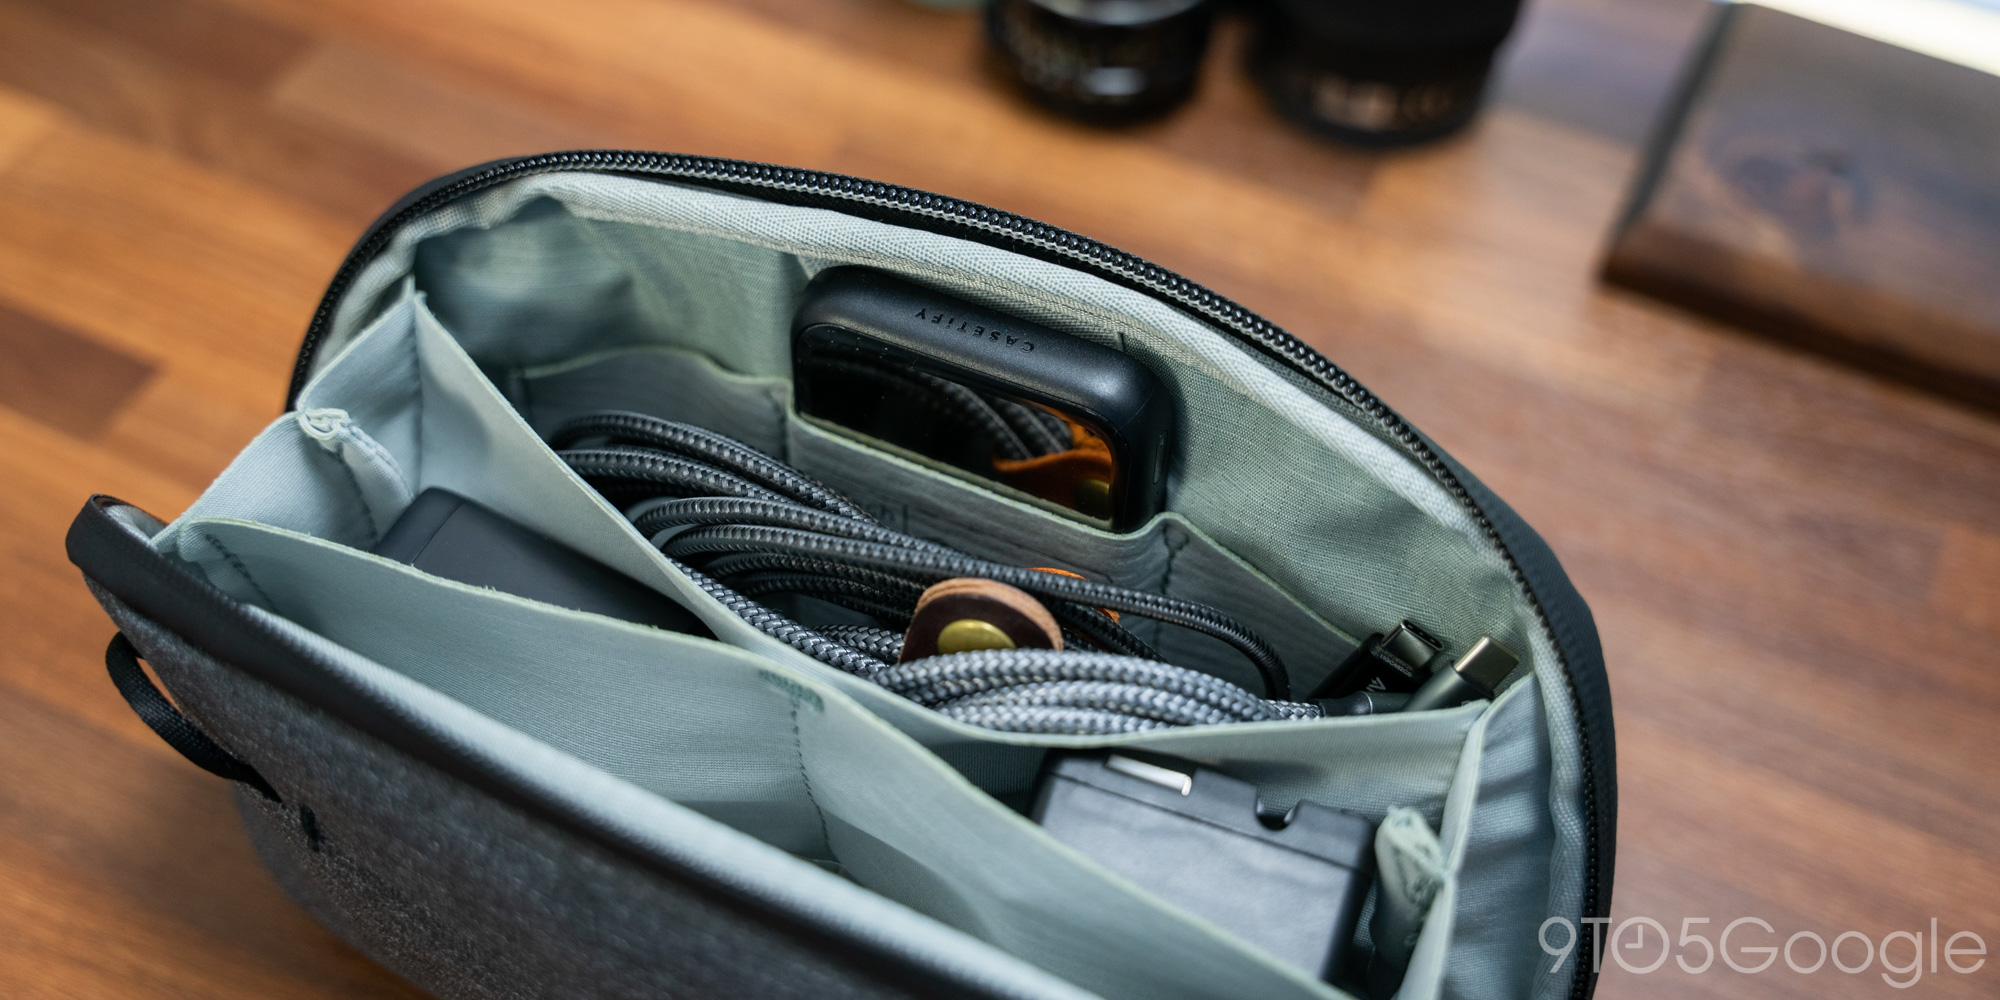 Peak Design's new Small Tech pouch is a perfect travel companion